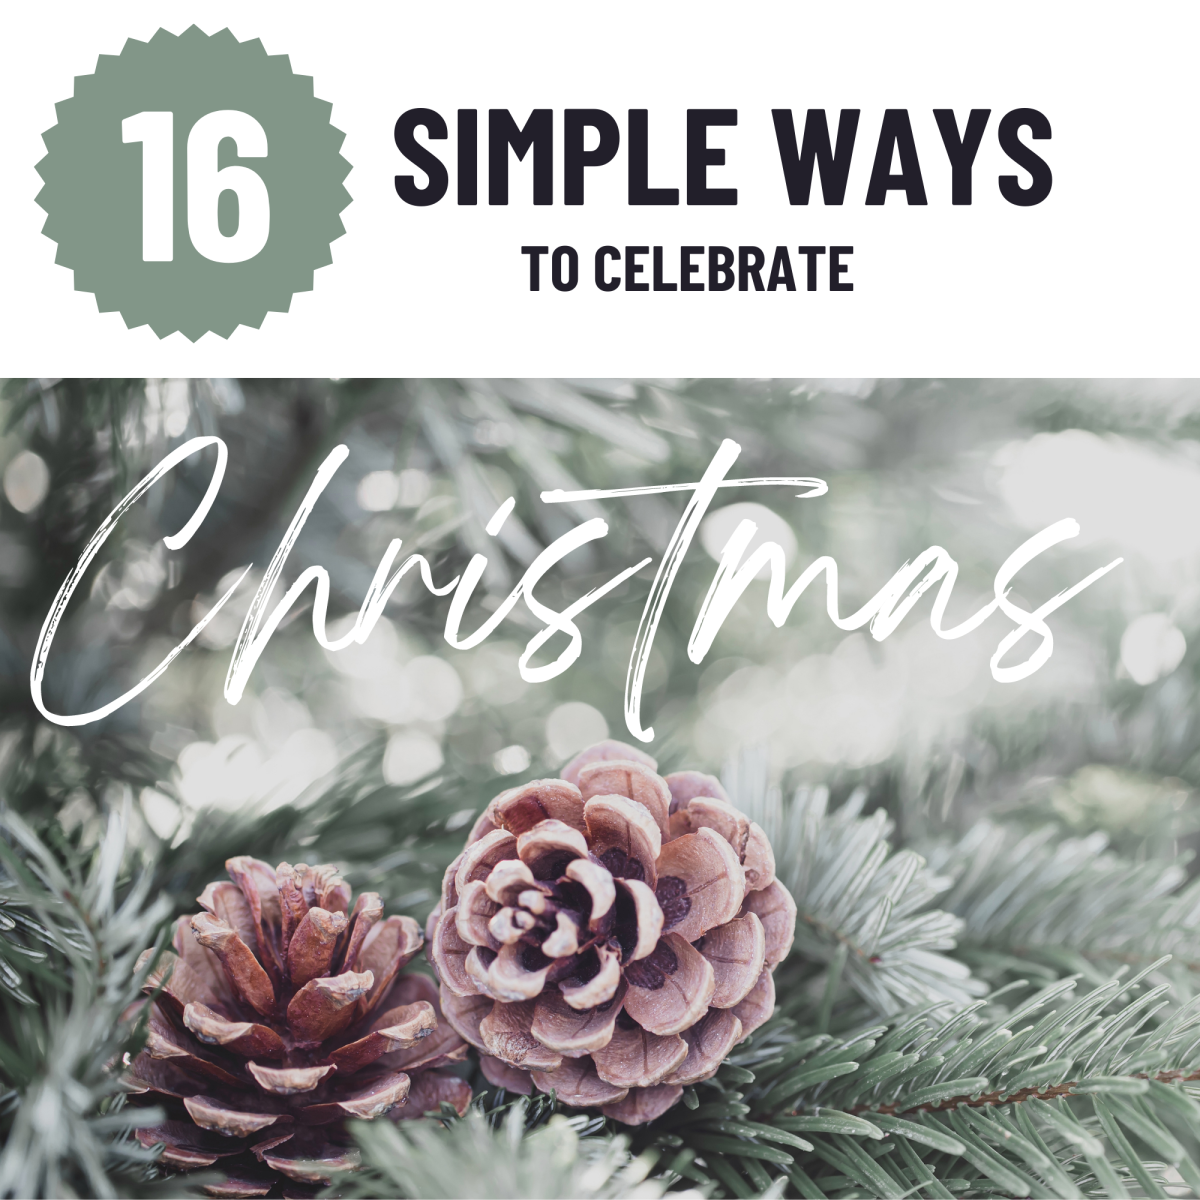 De-stress Your Holiday Celebration: 15 Simple Ways to Celebrate